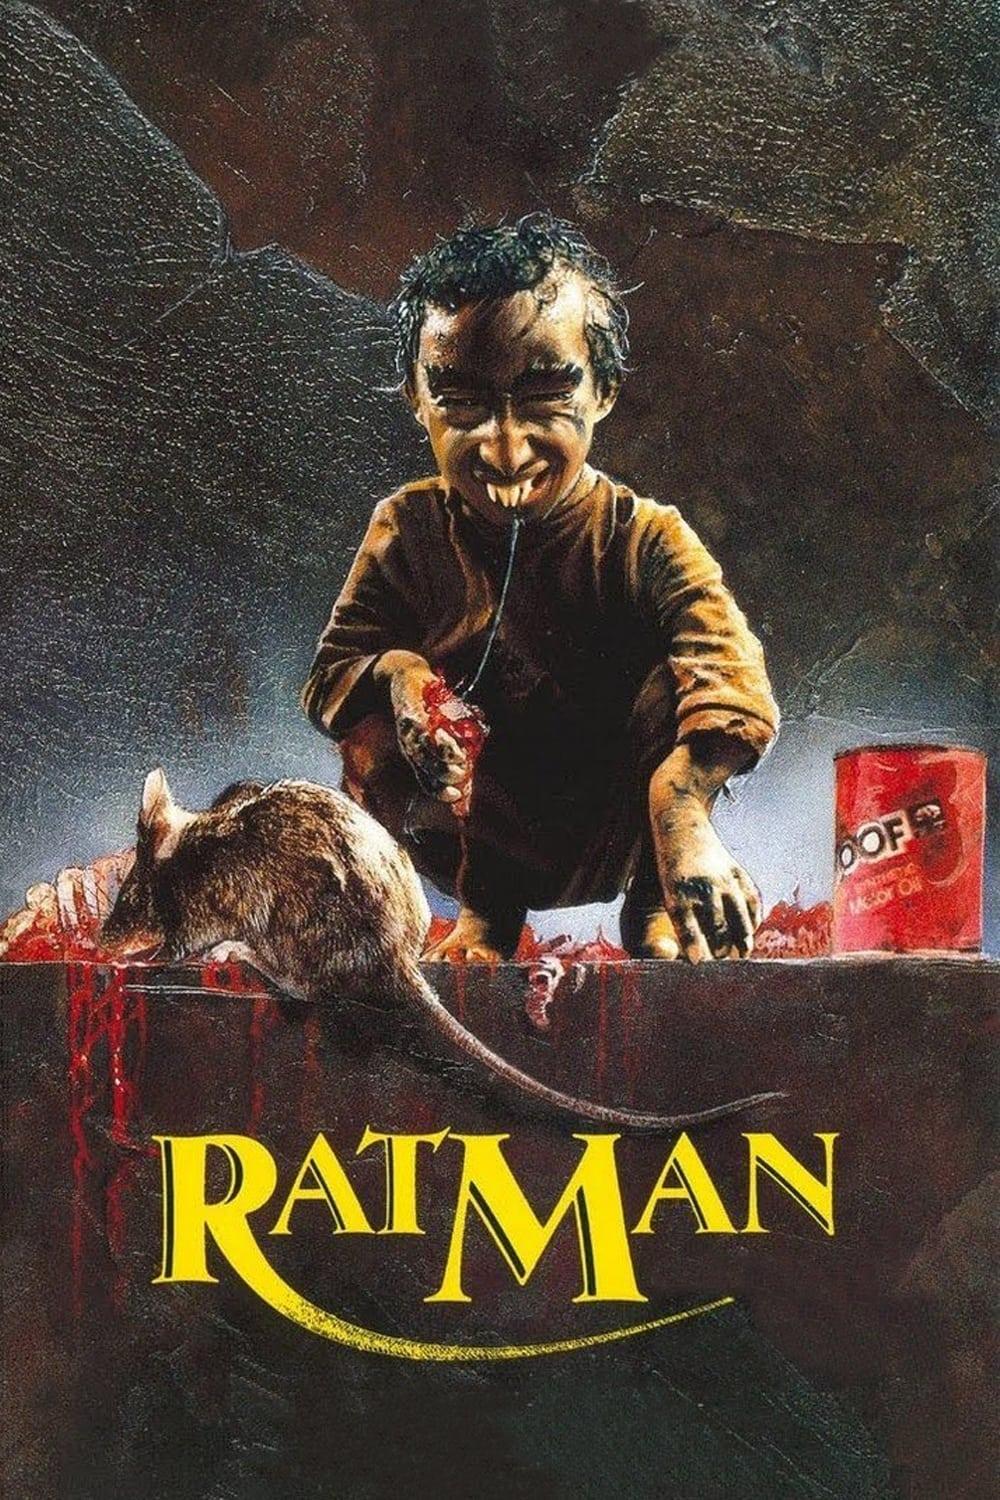 Rat Man poster